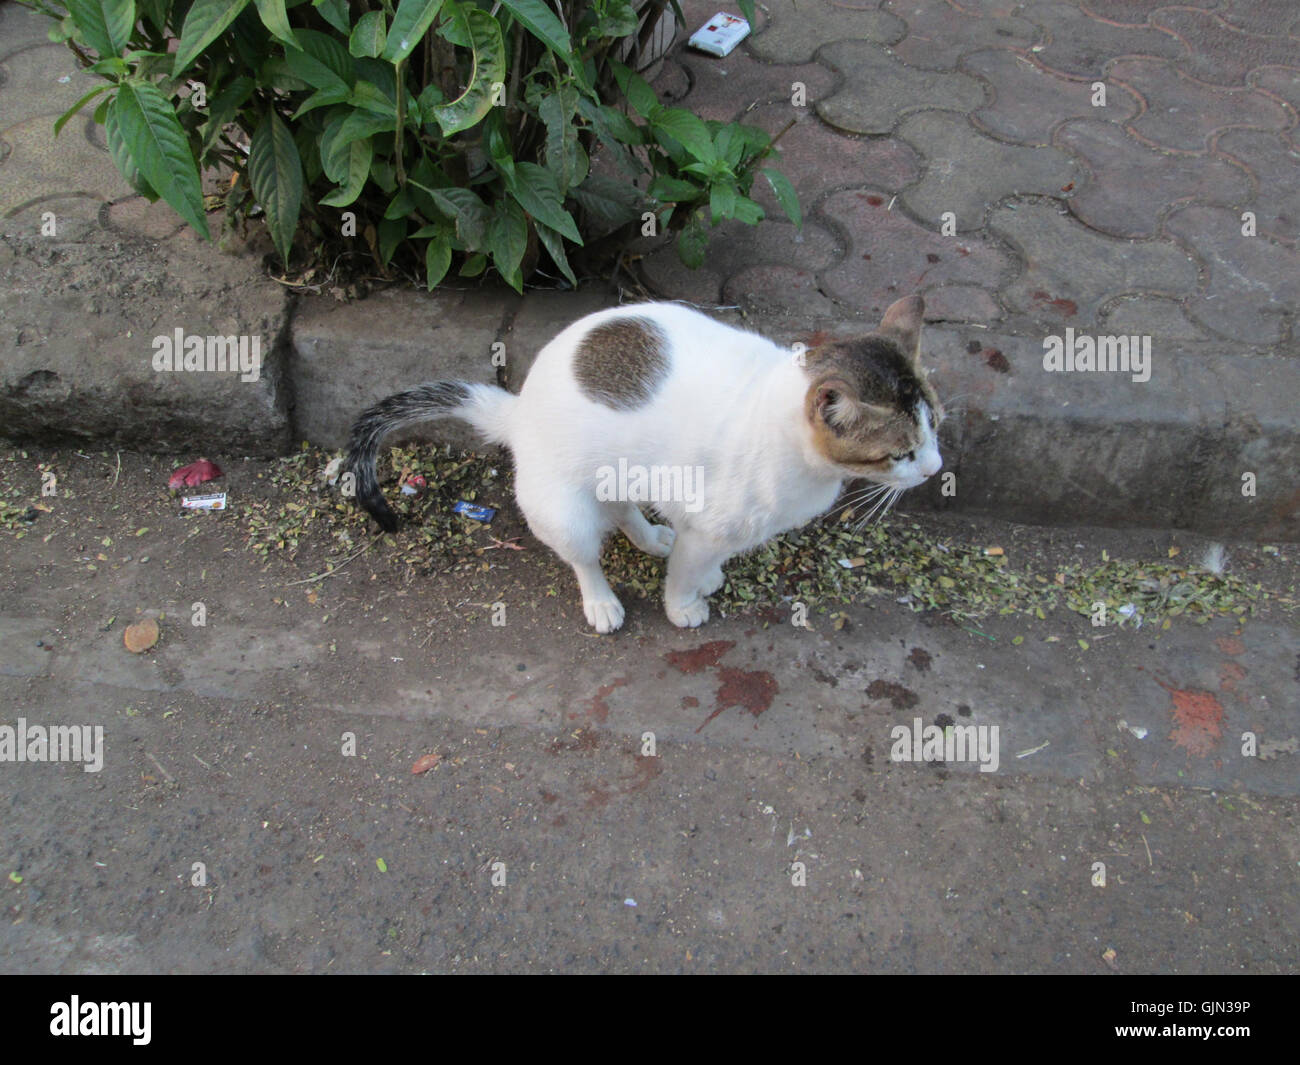 'Radhe',Worli fish market cat defecating in the street gutter. Stock Photo